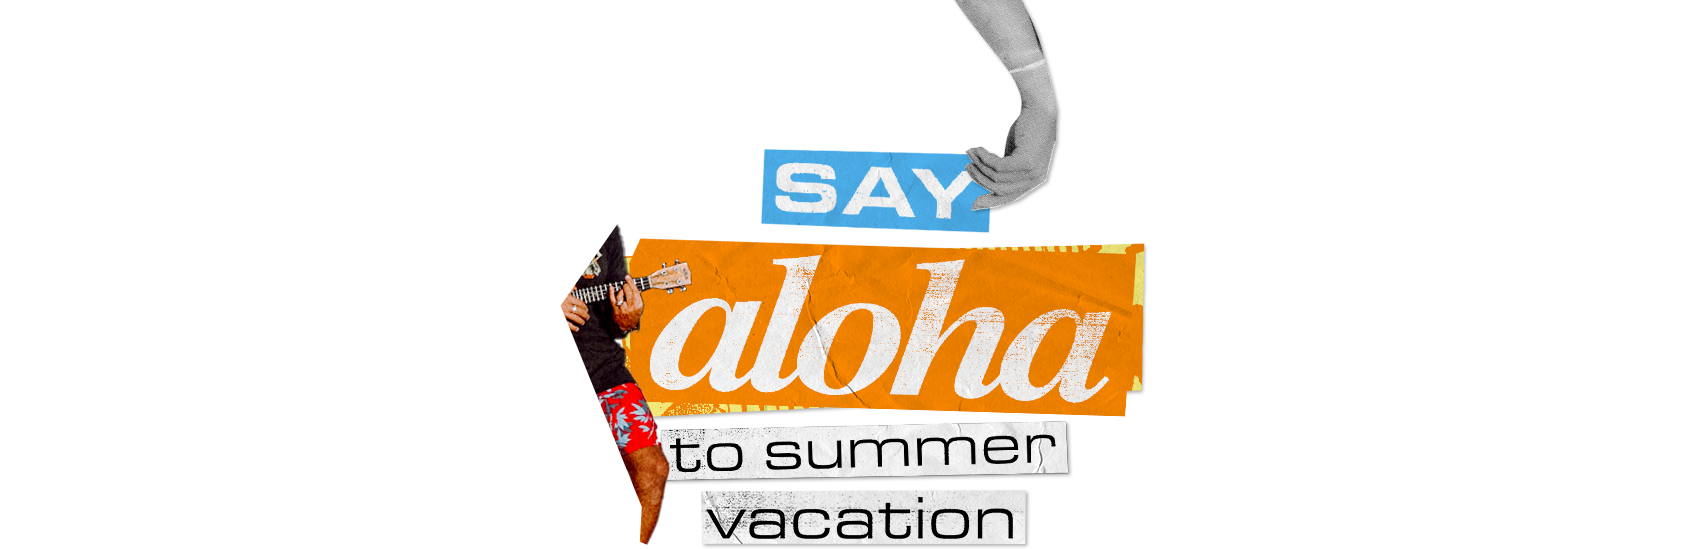 say aloha to summer vacation